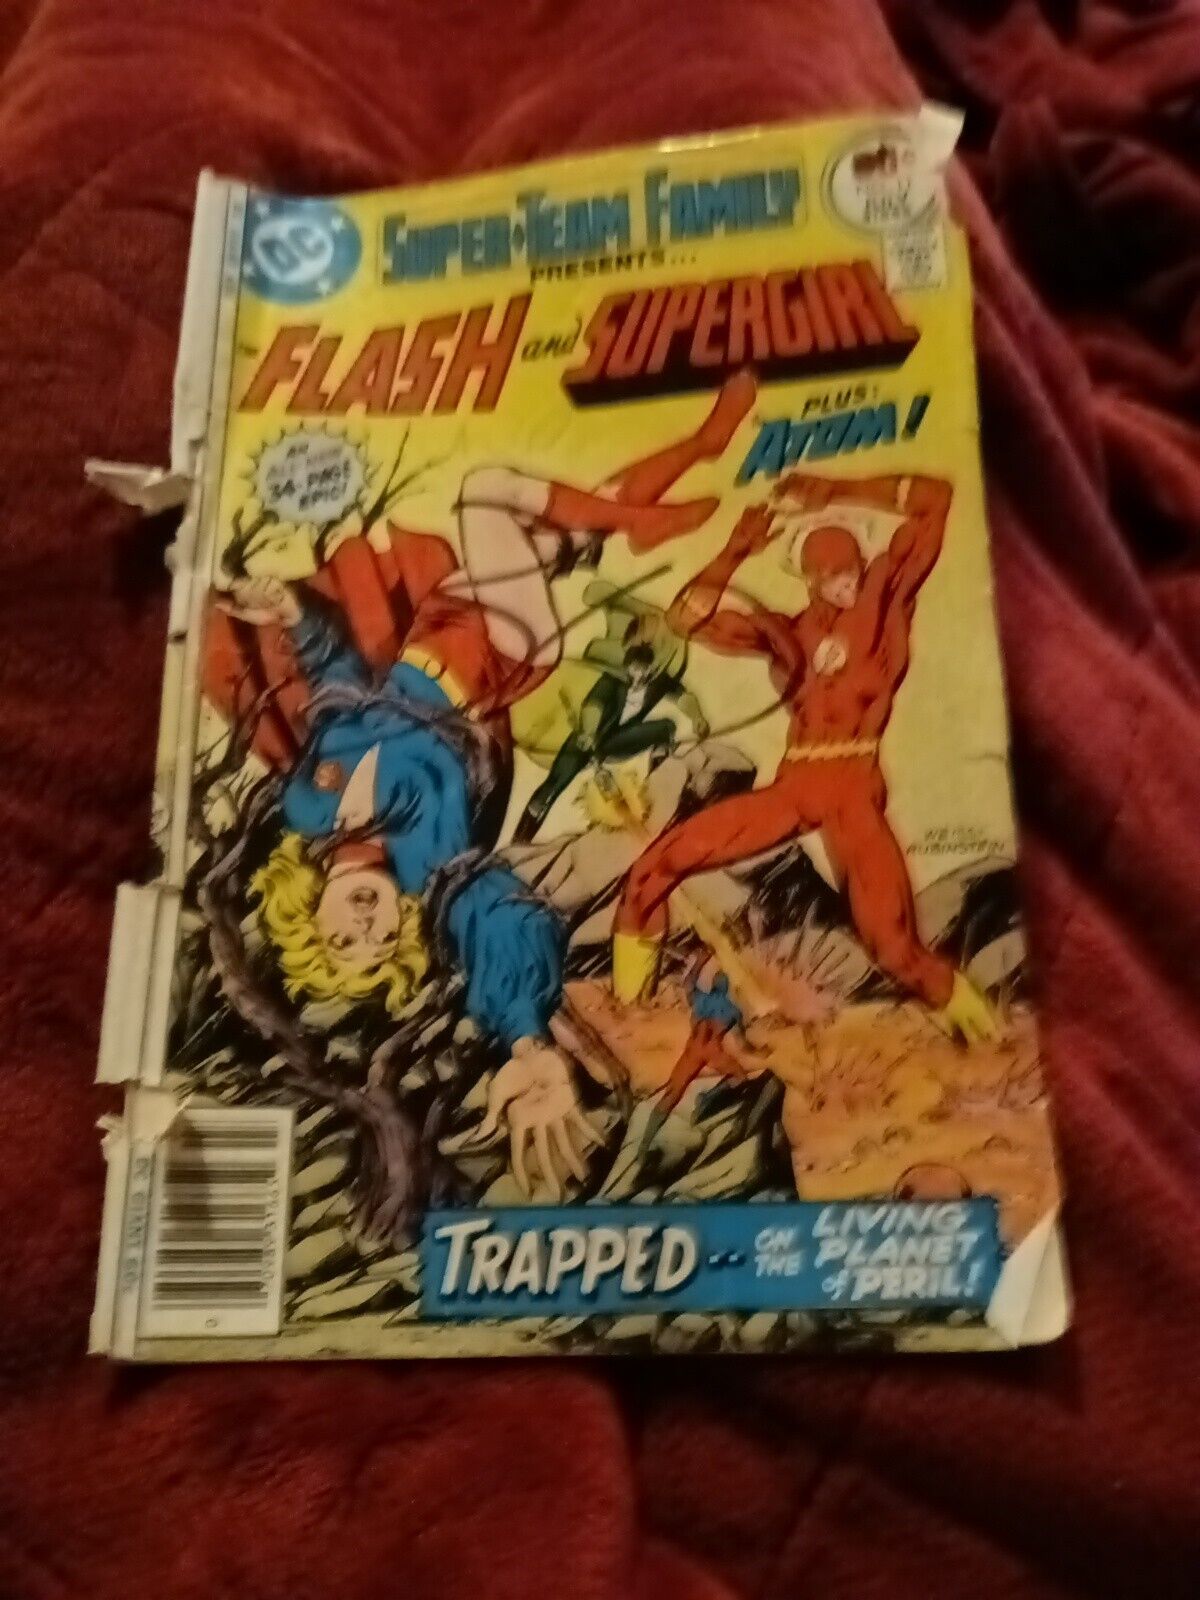 Super-Team Family #11 Flash & Supergirl bondage cover July 1977, DC giant comics